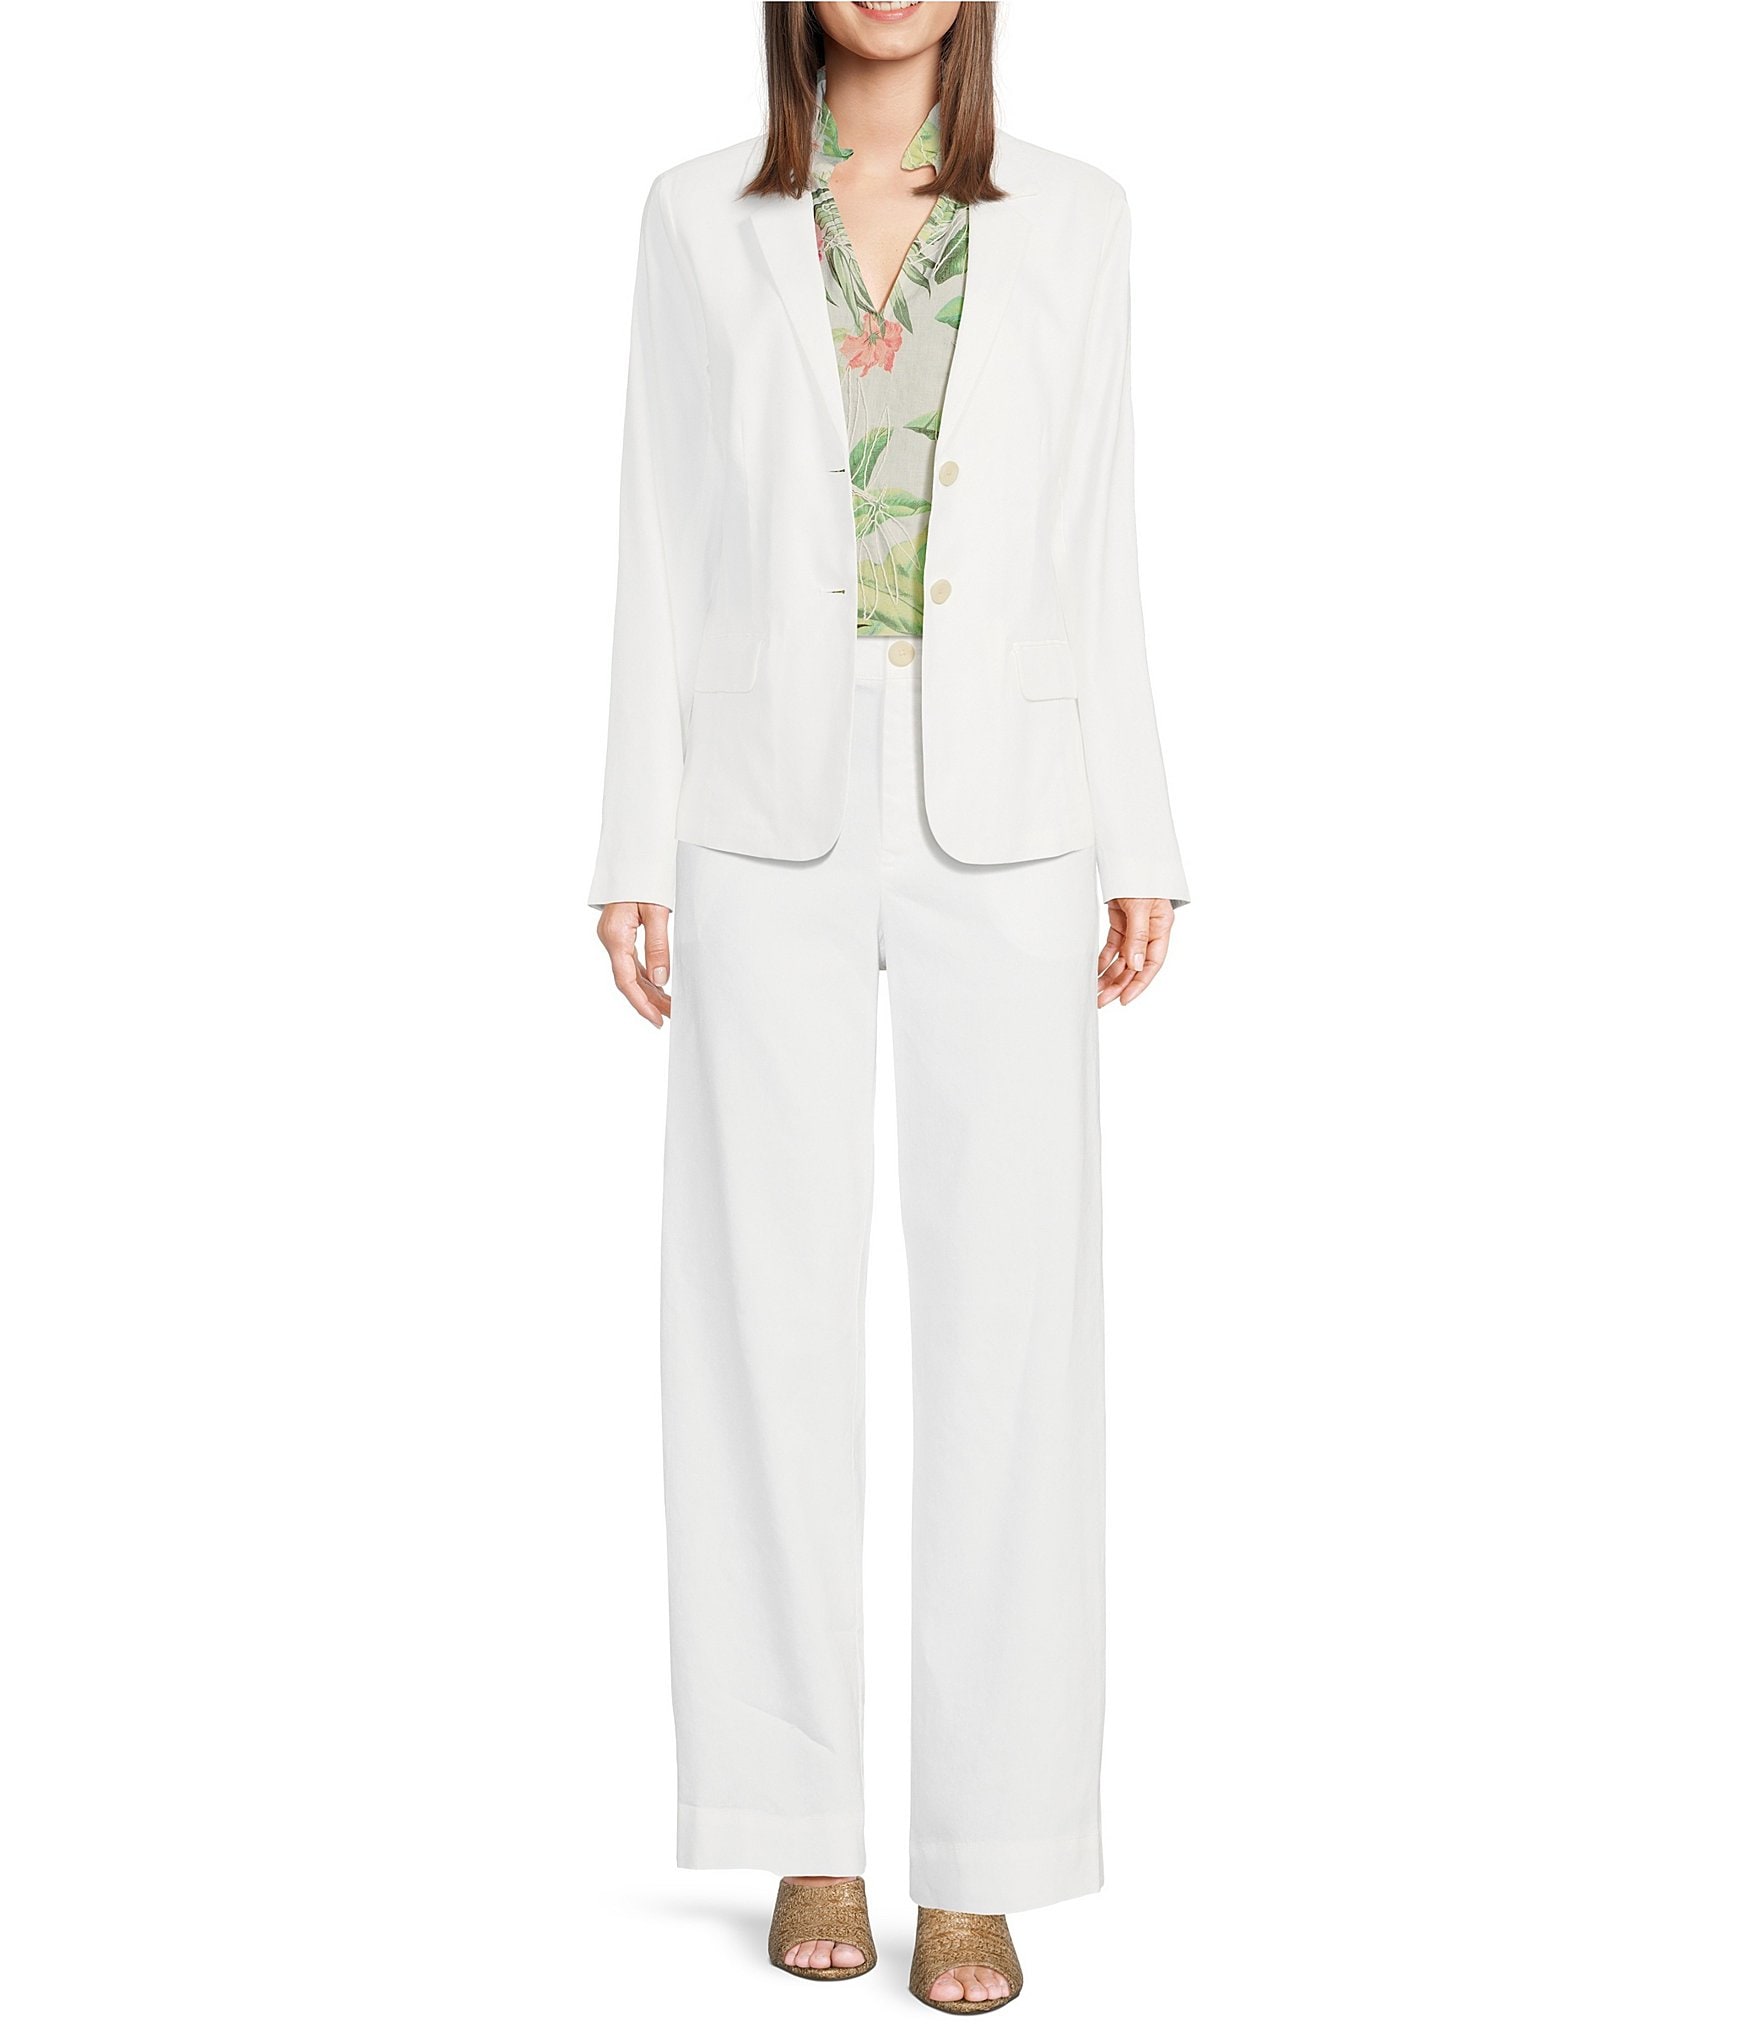 White Pantsuit for Women, White Formal Pants Suit Set for Women